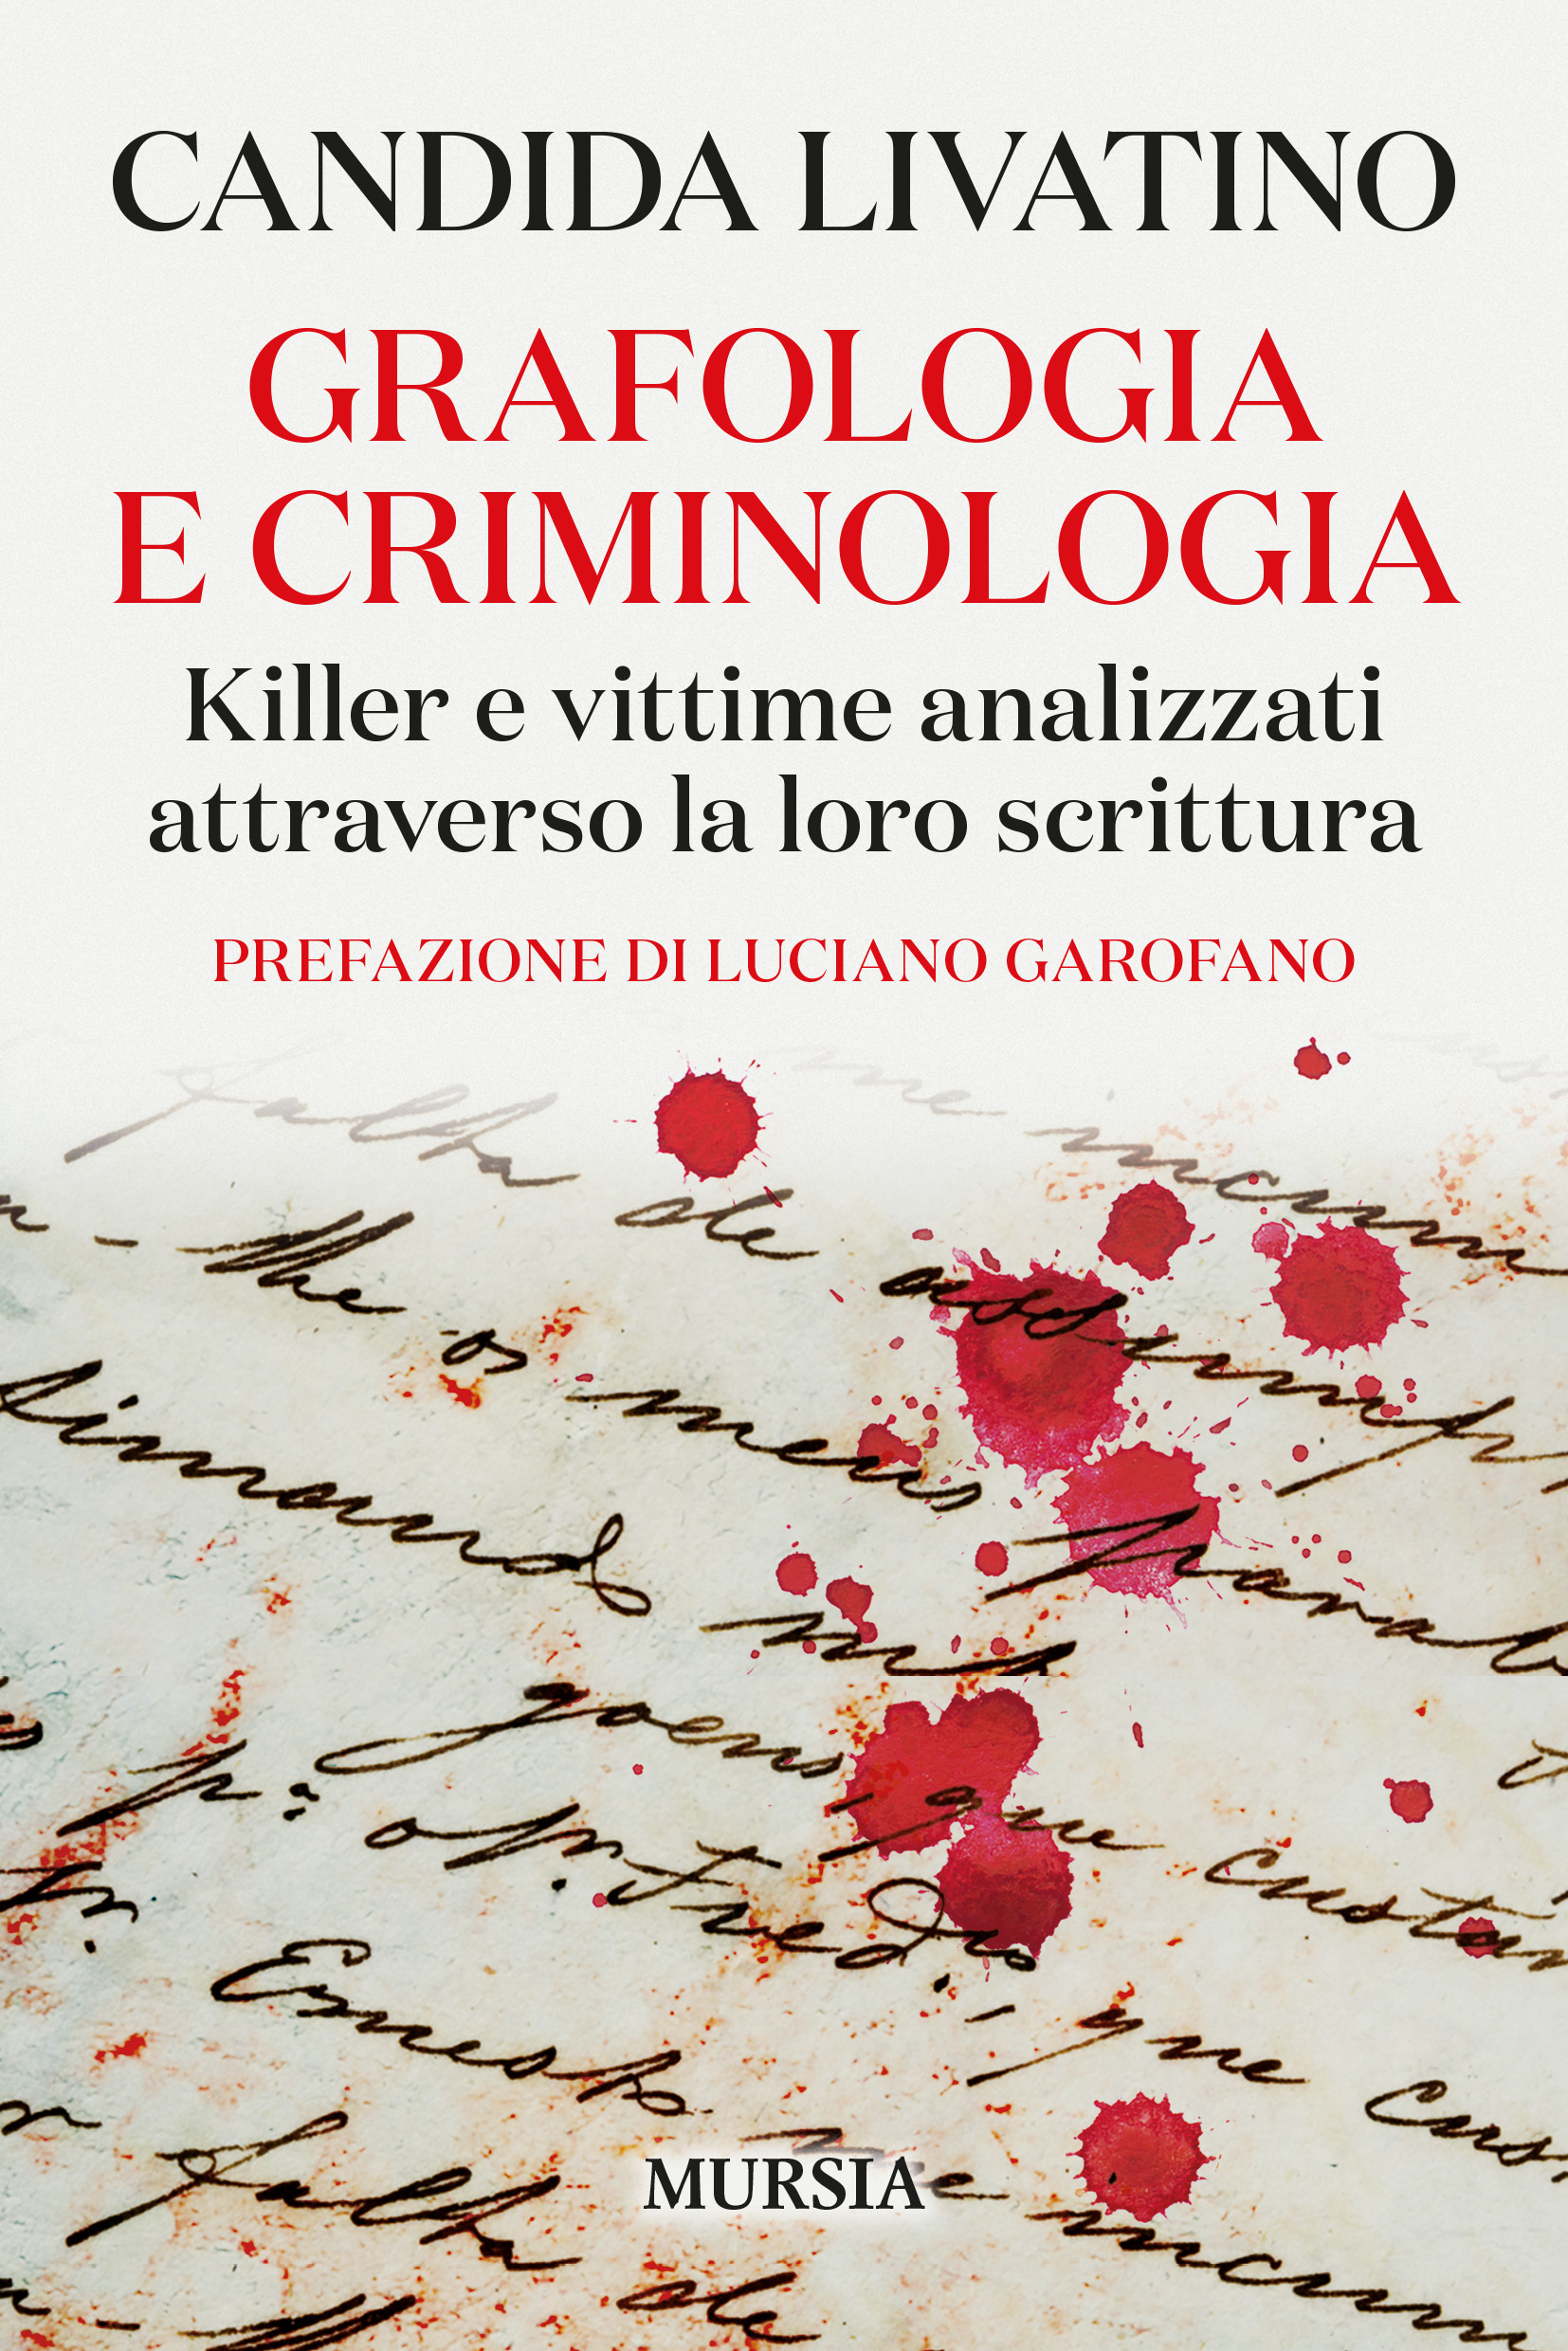 COVER GRAFOLOGIA E CRIMINOLOGIA